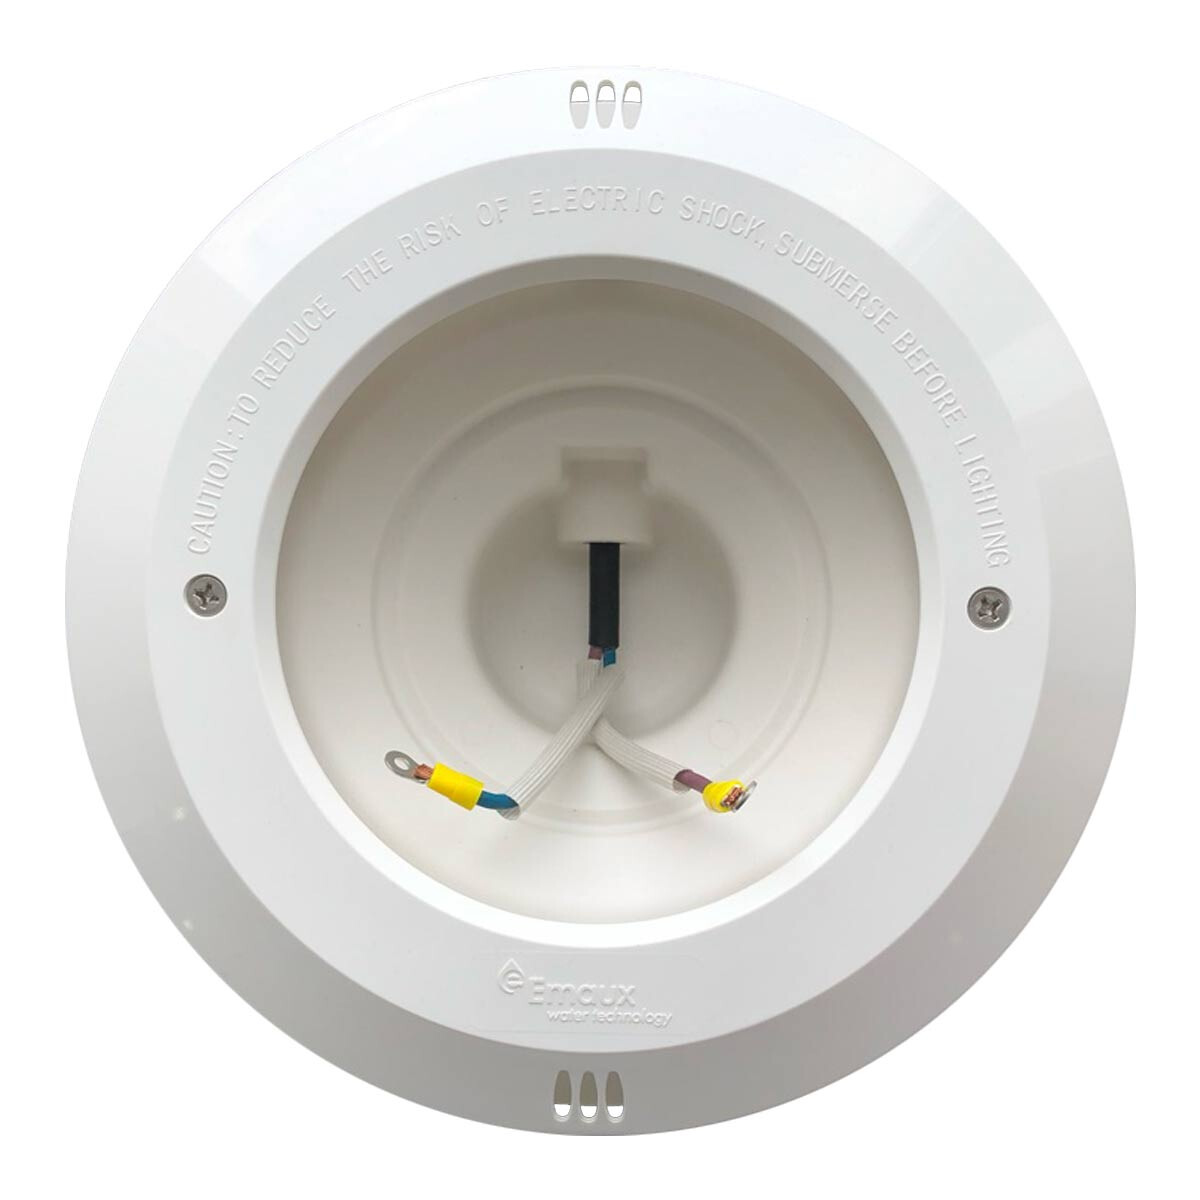 Лампа LED AquaViva GAS PAR56 75W SMD White